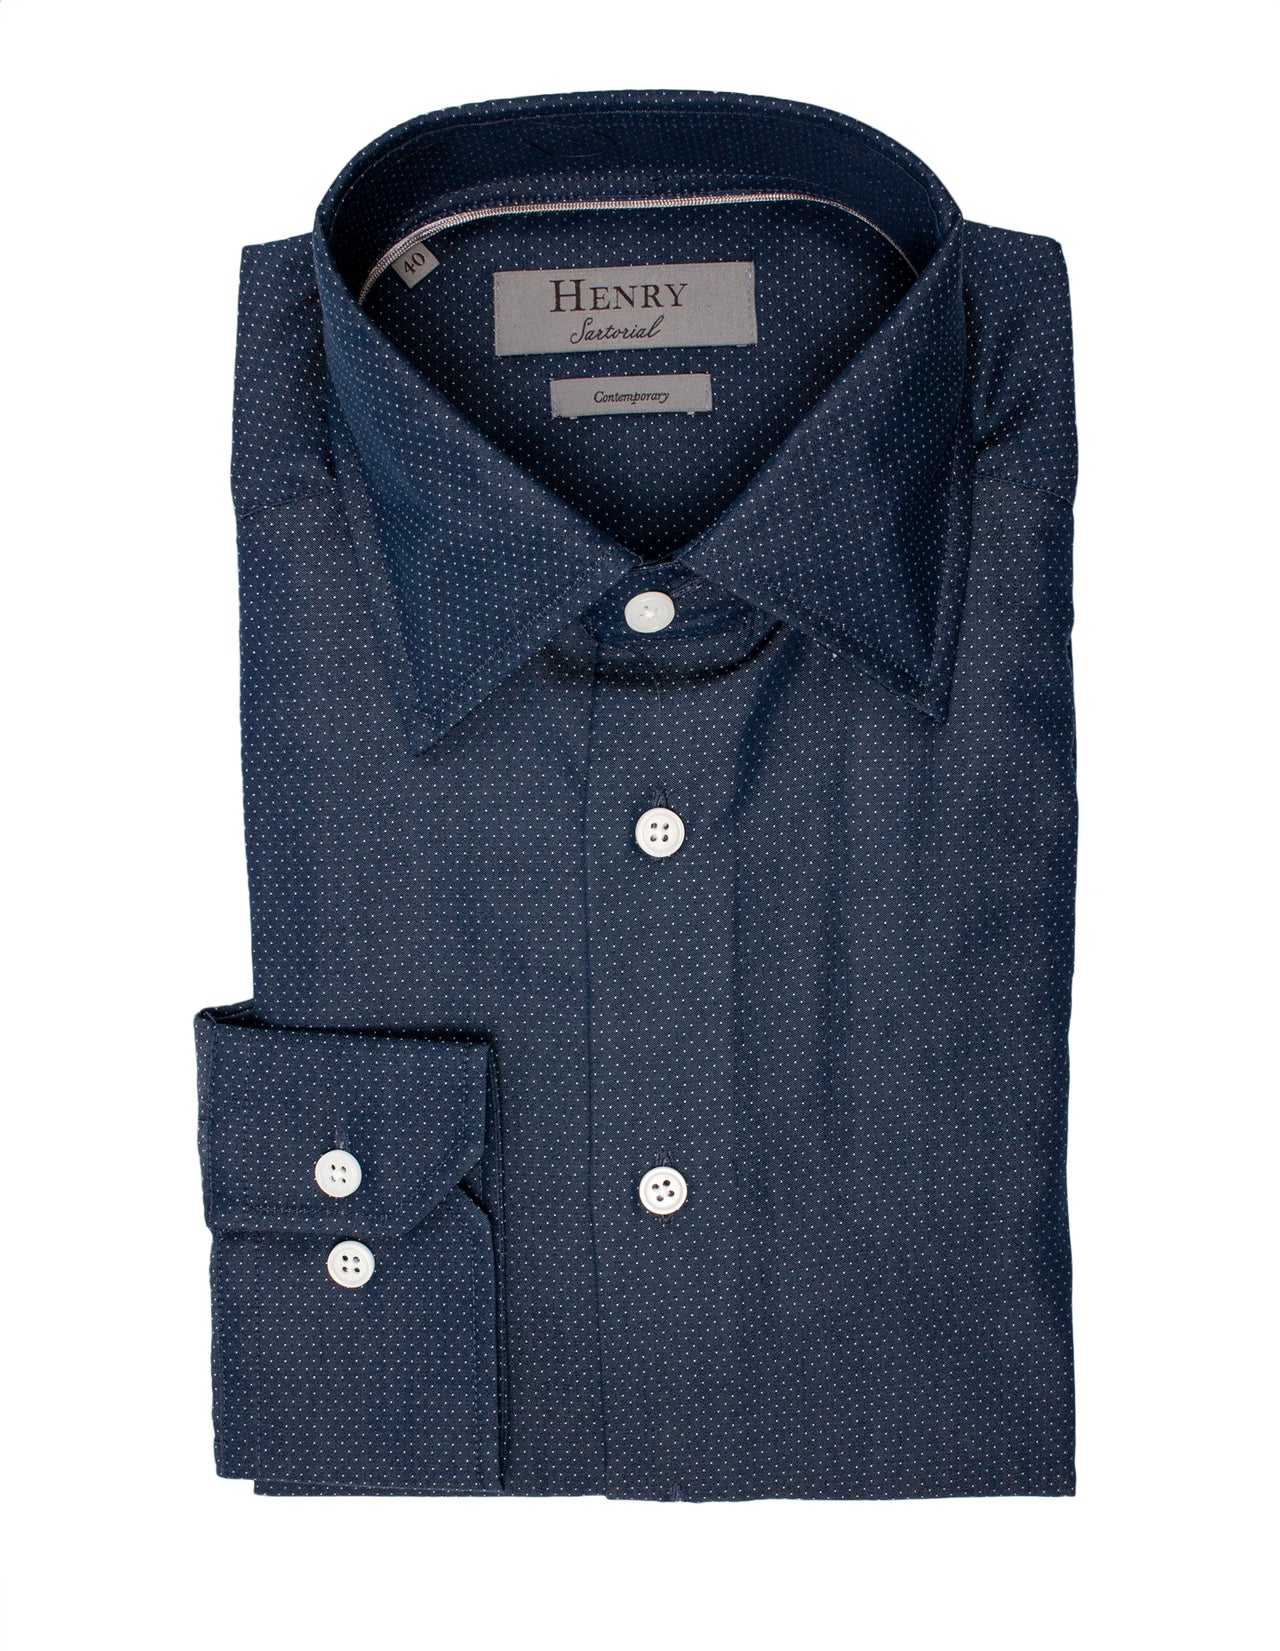 HENRY SARTORIAL Contemporary Fit Dot Shirt NAVY